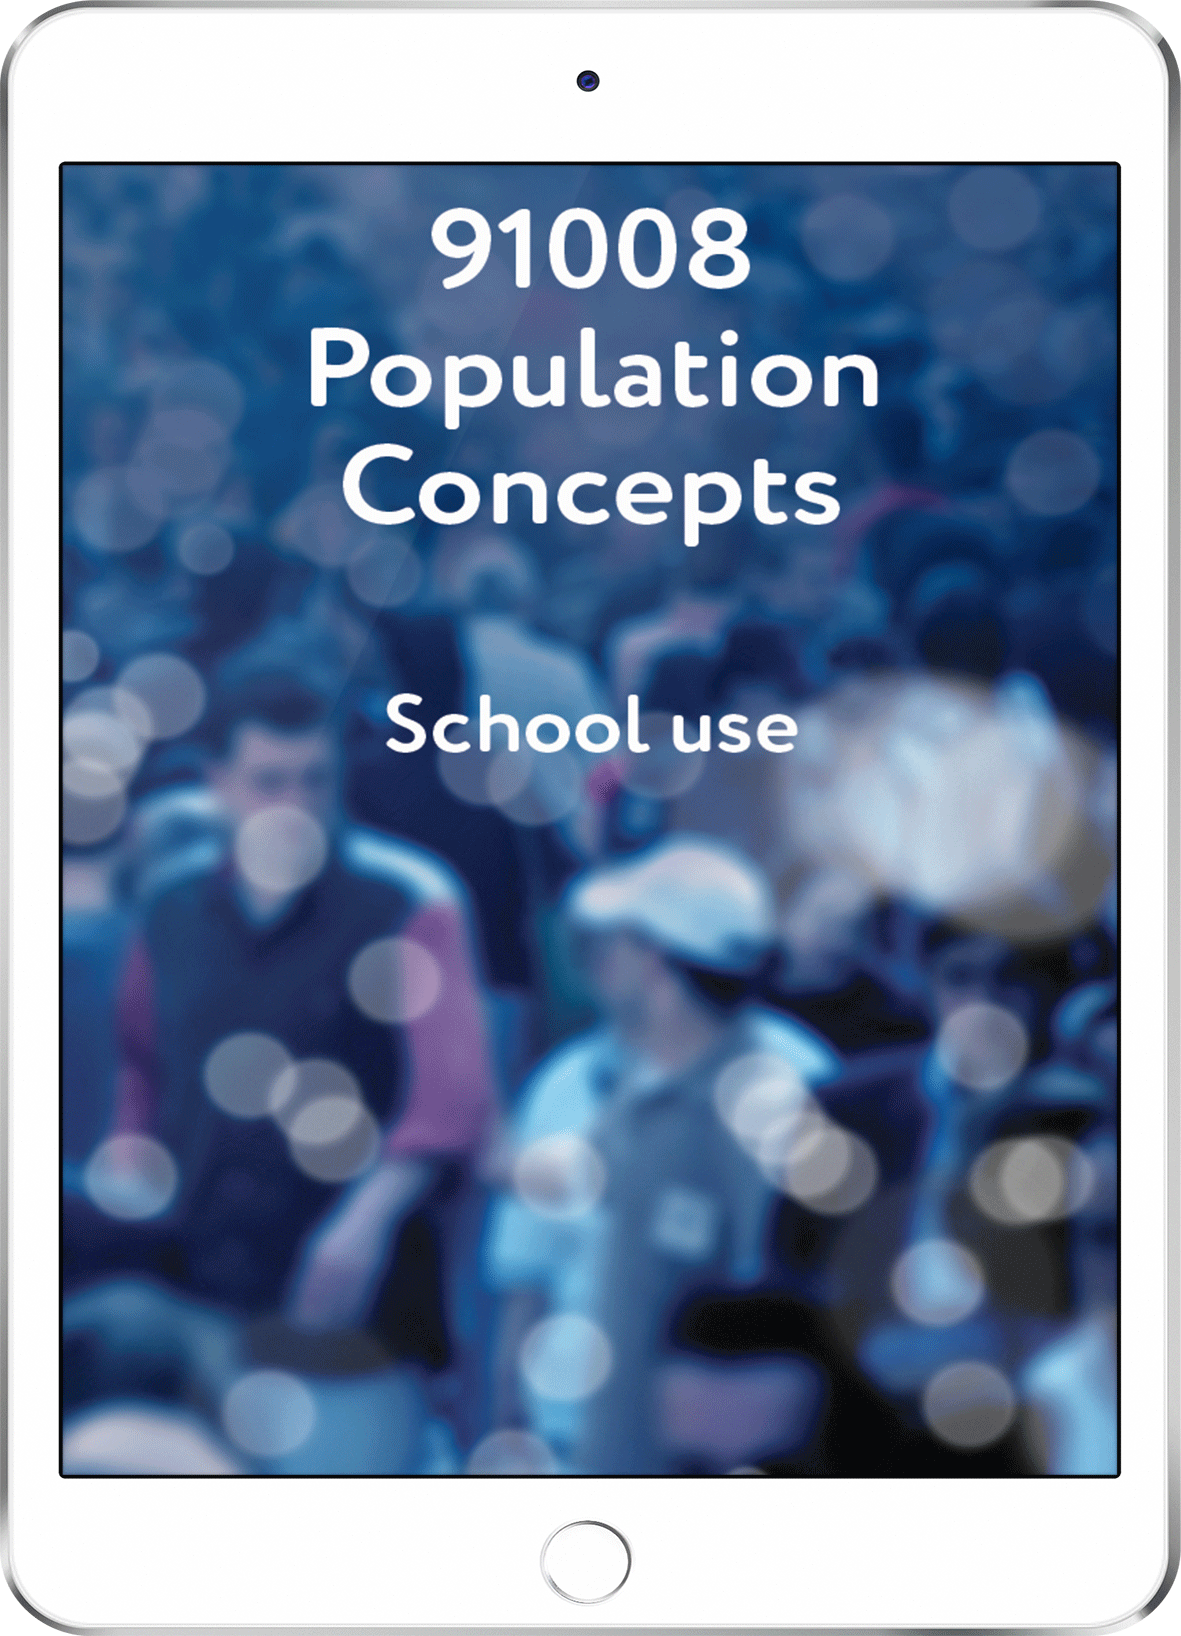 91008 Population Concepts - School Use